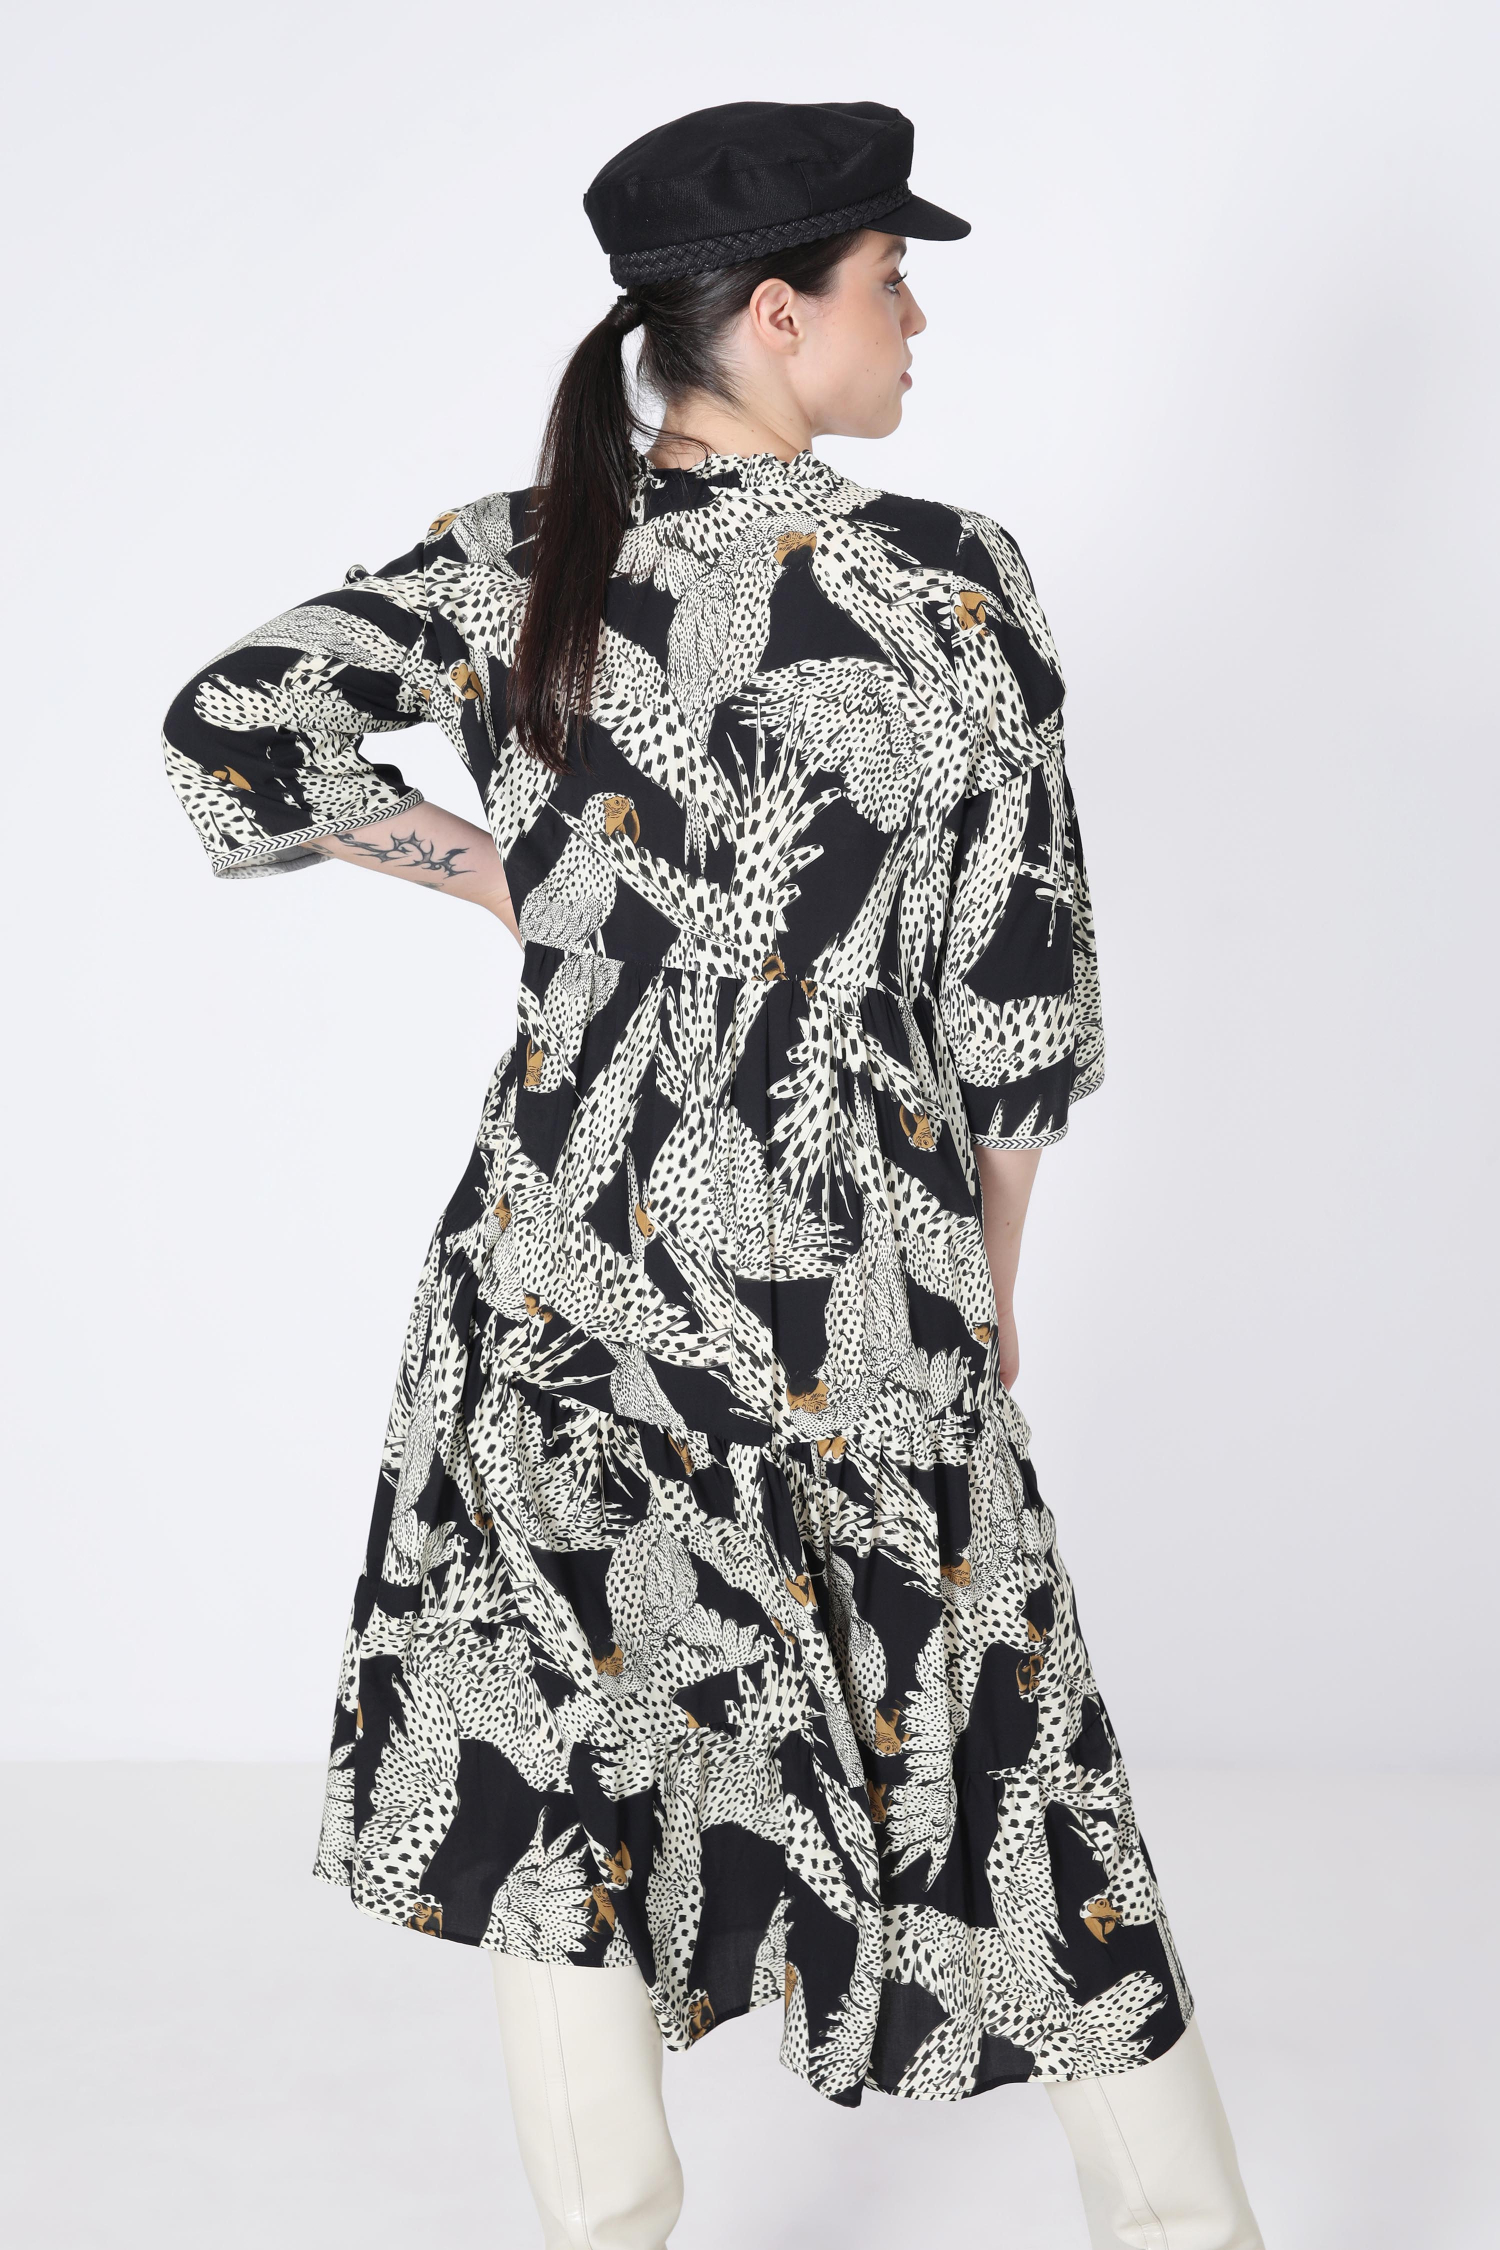 Bohemian style printed dress